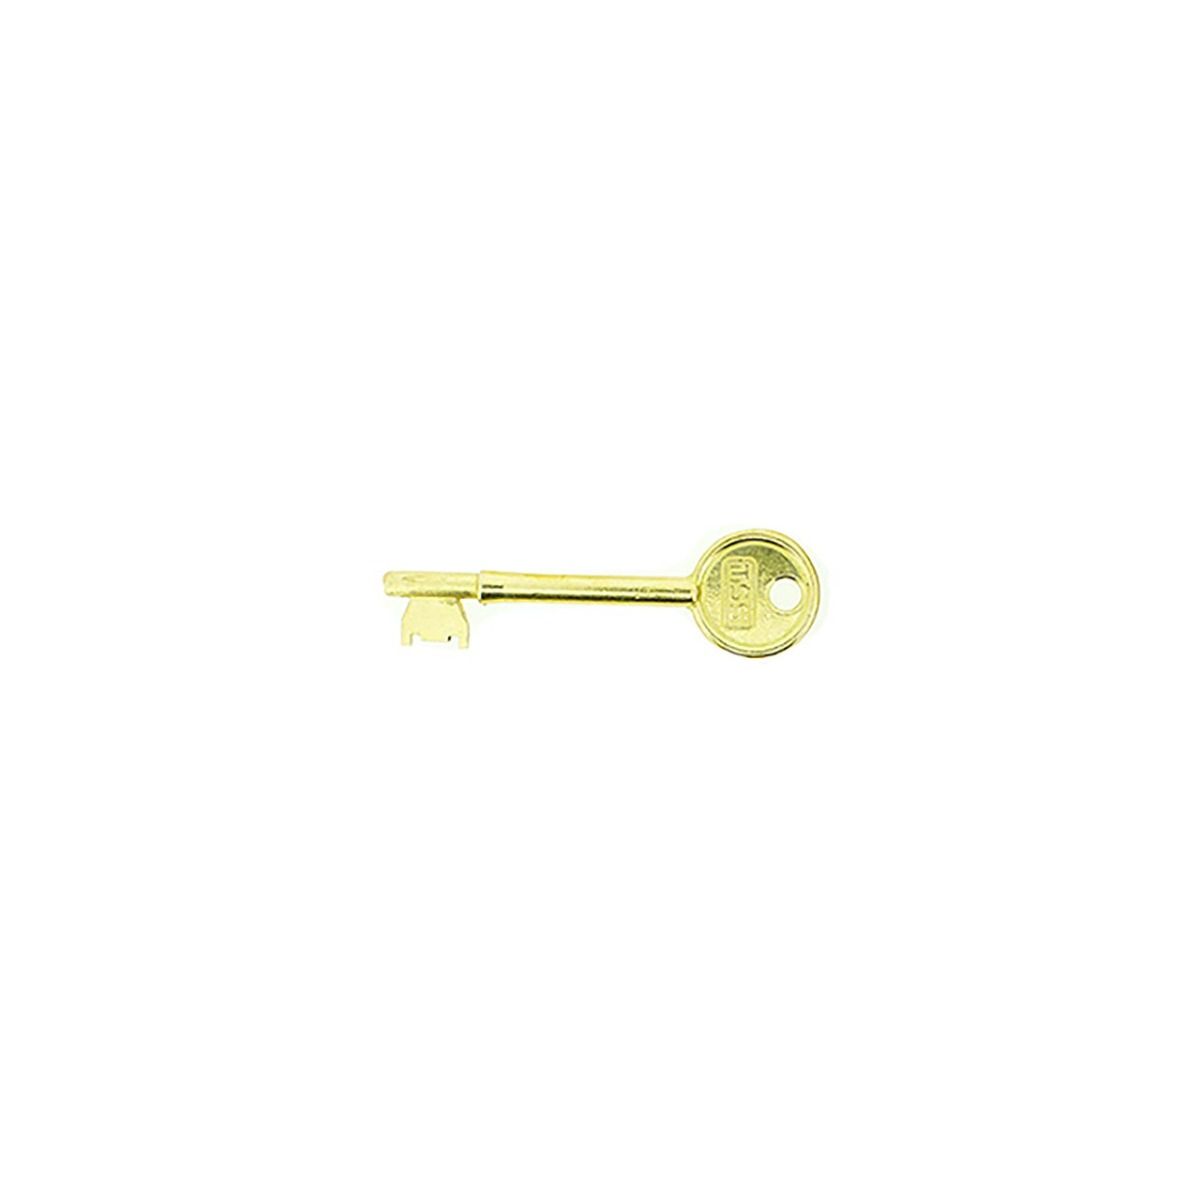 Extra key For TSS Mortice Locks